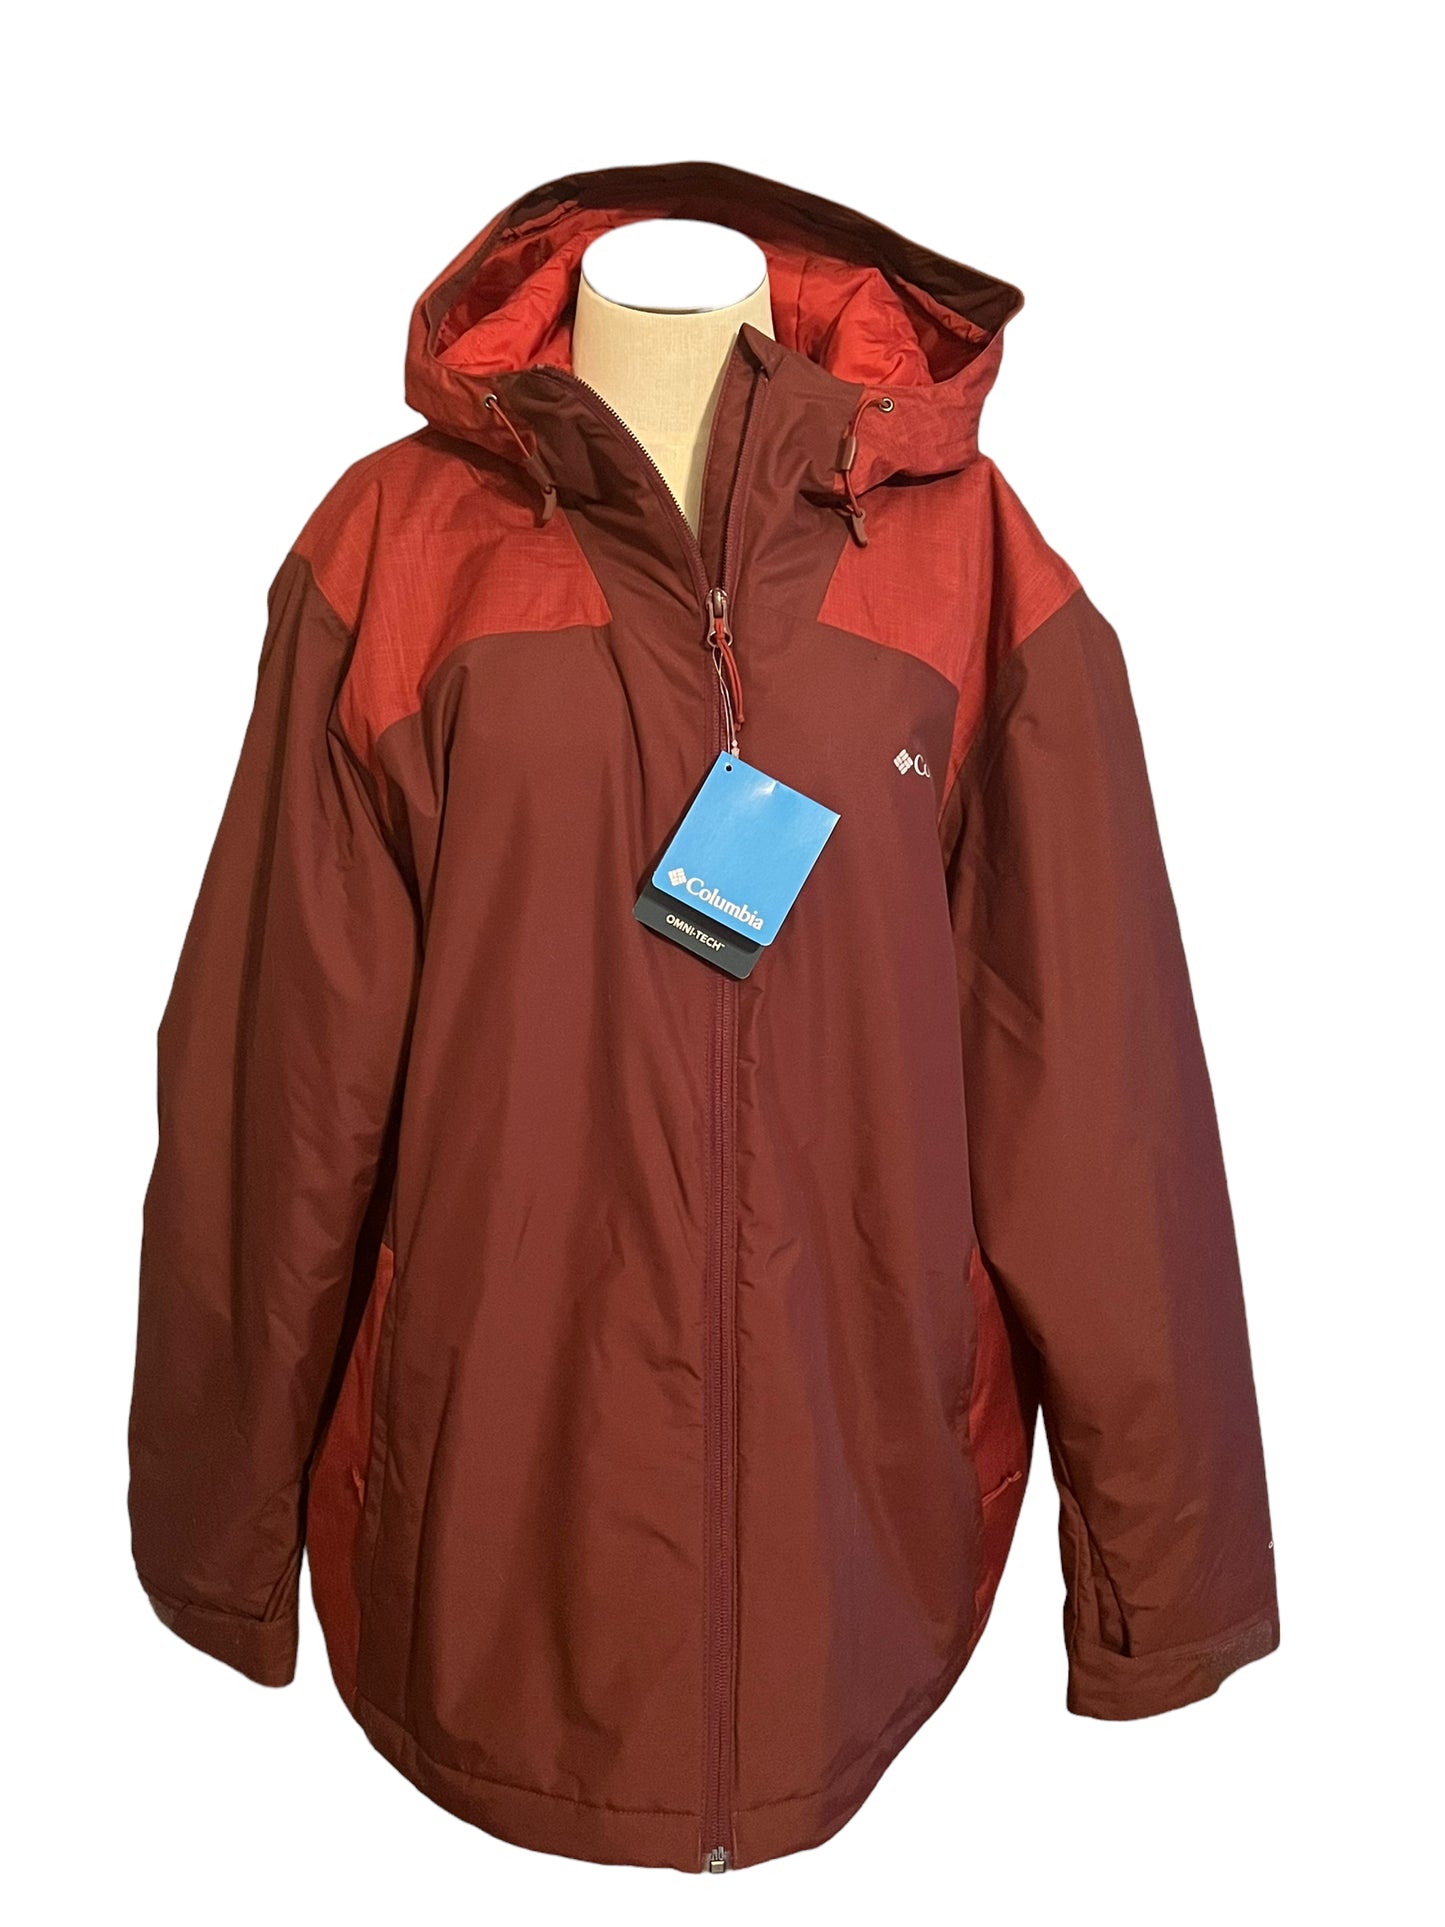 Columbia Tipton Peak Size 2X Insulated Jacket